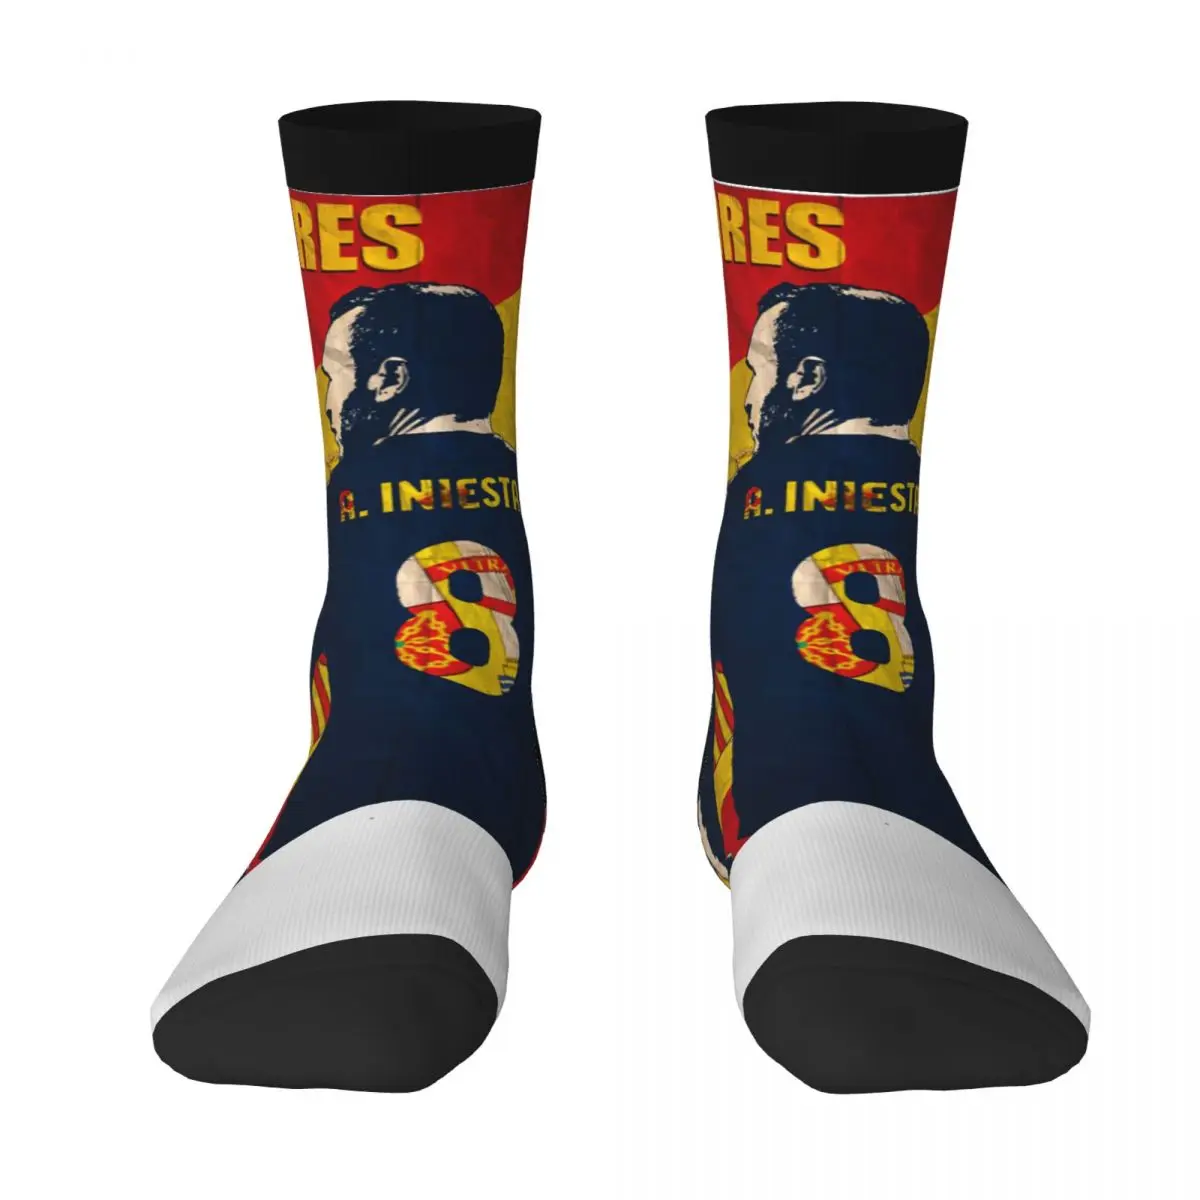 

Andress And Iniestas Spain 7 Contrast color socks Infantry pack Compression Socks Geek Vintage Football Team Stocking